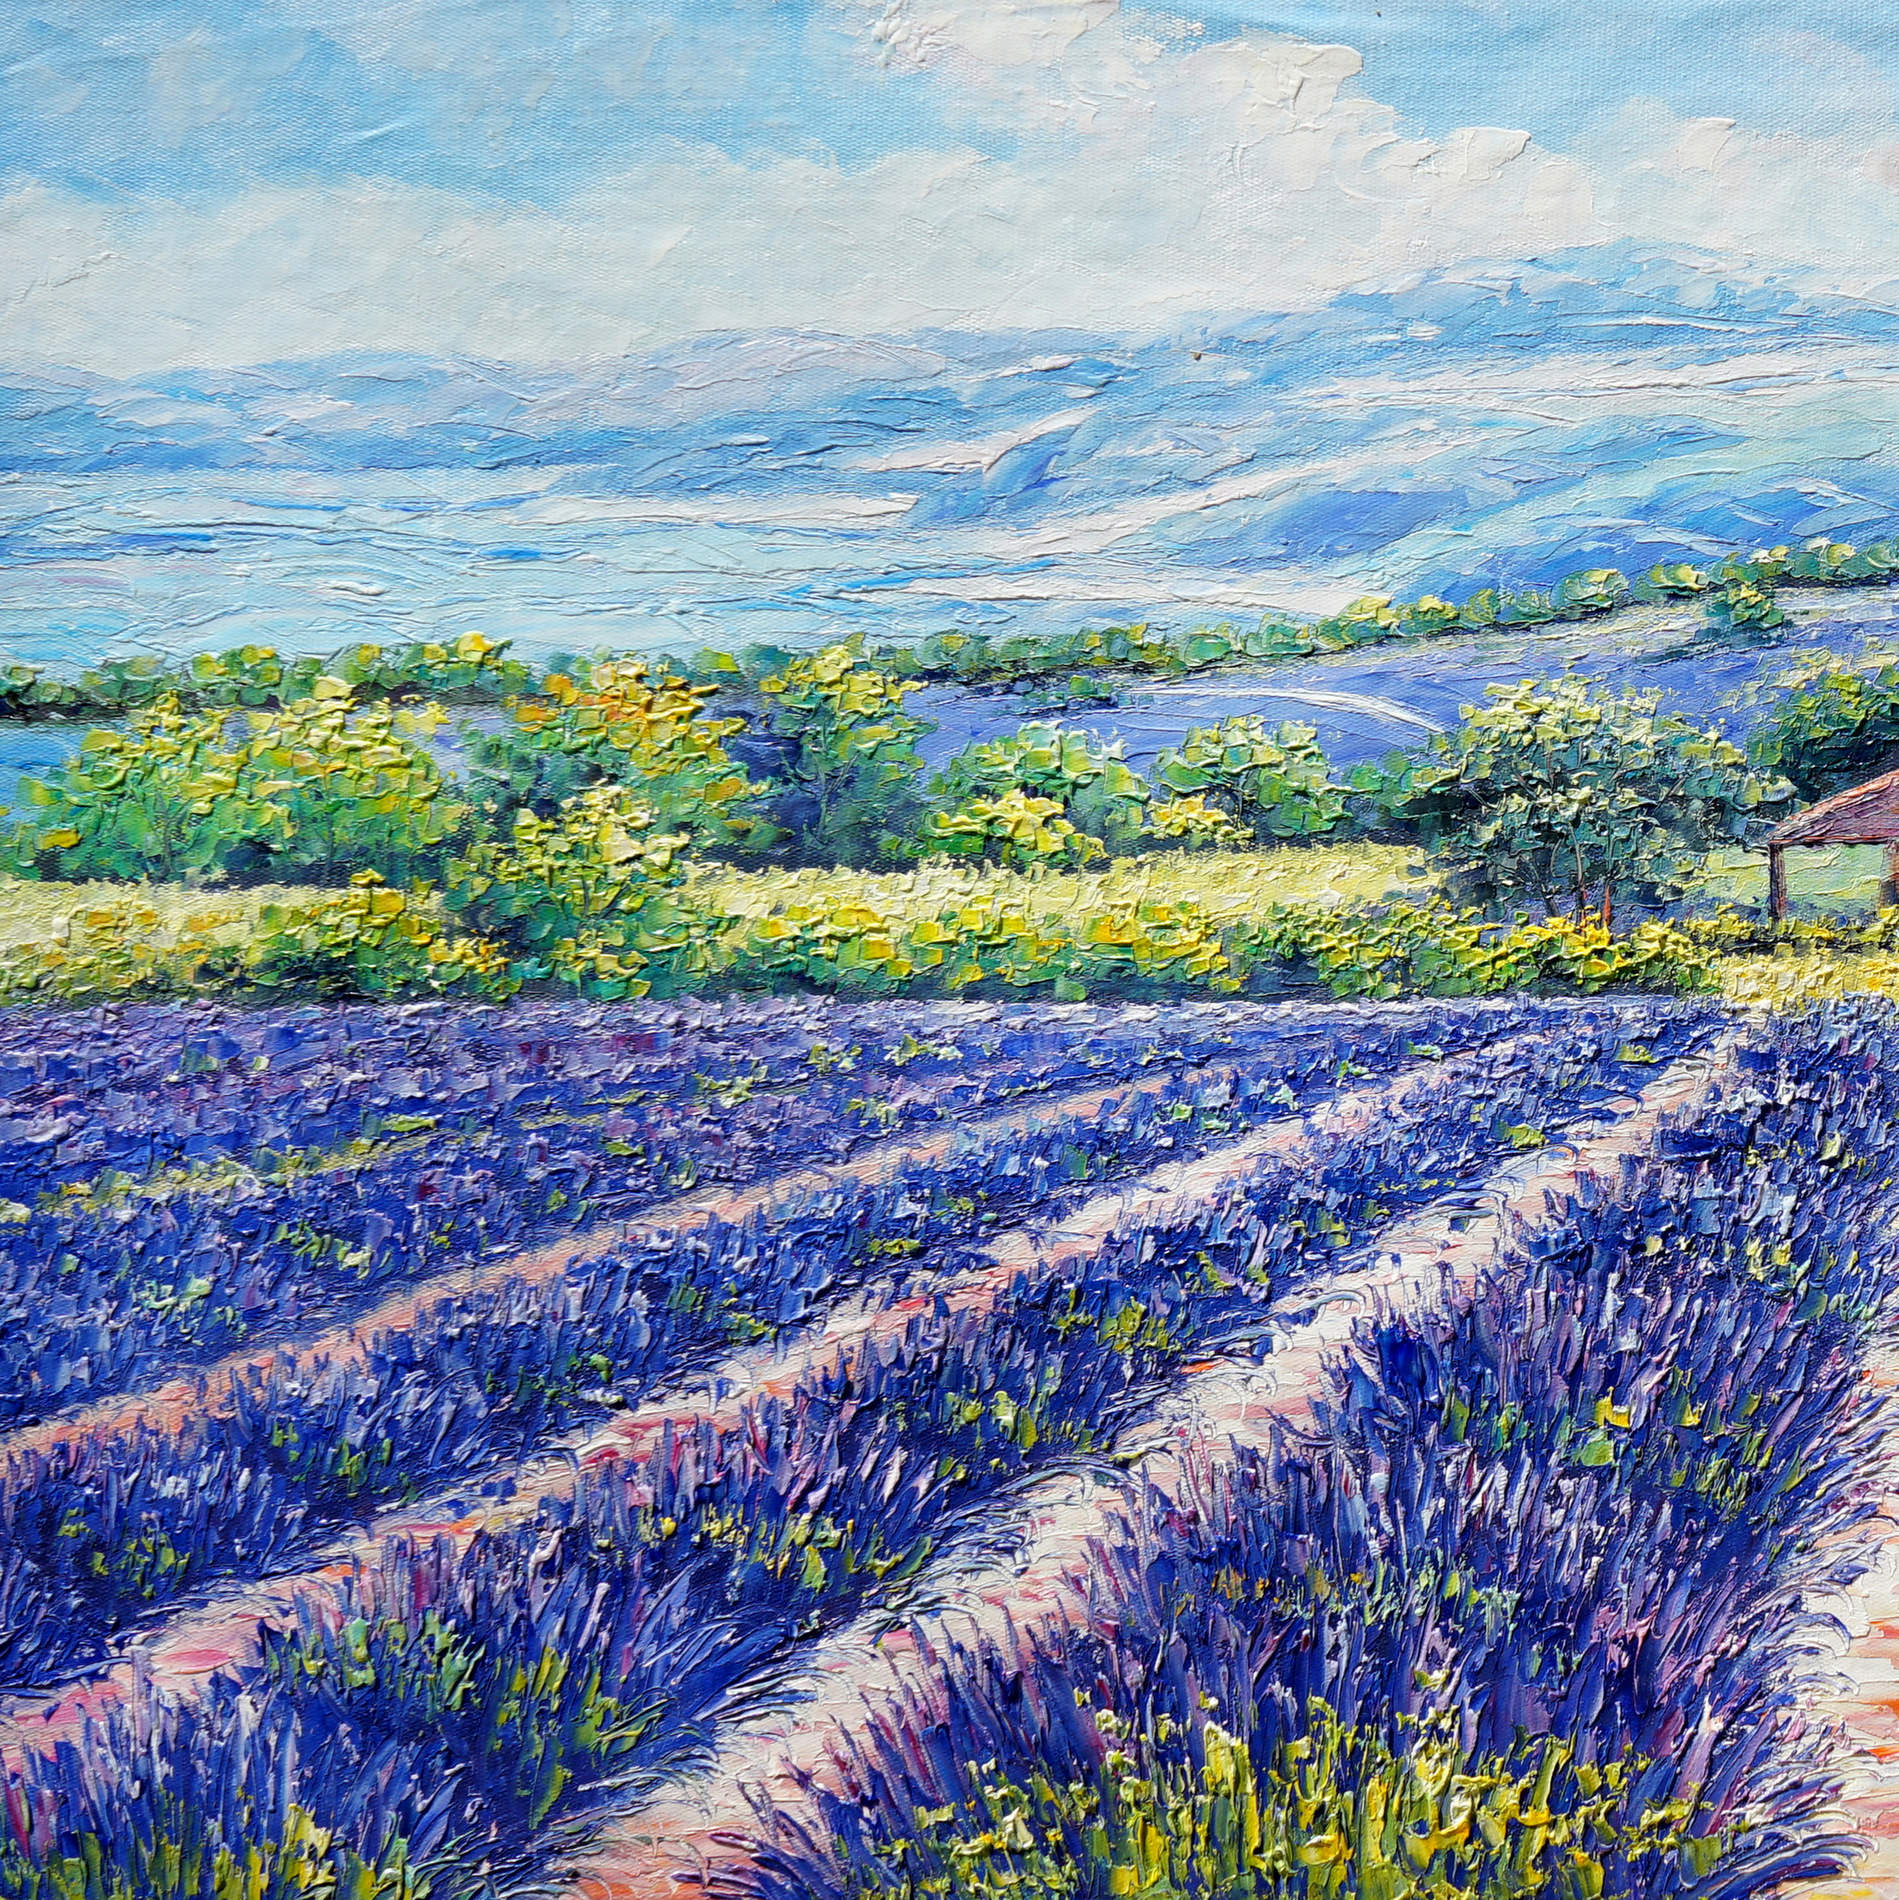 Hand painted Lavender fields 60x120cm